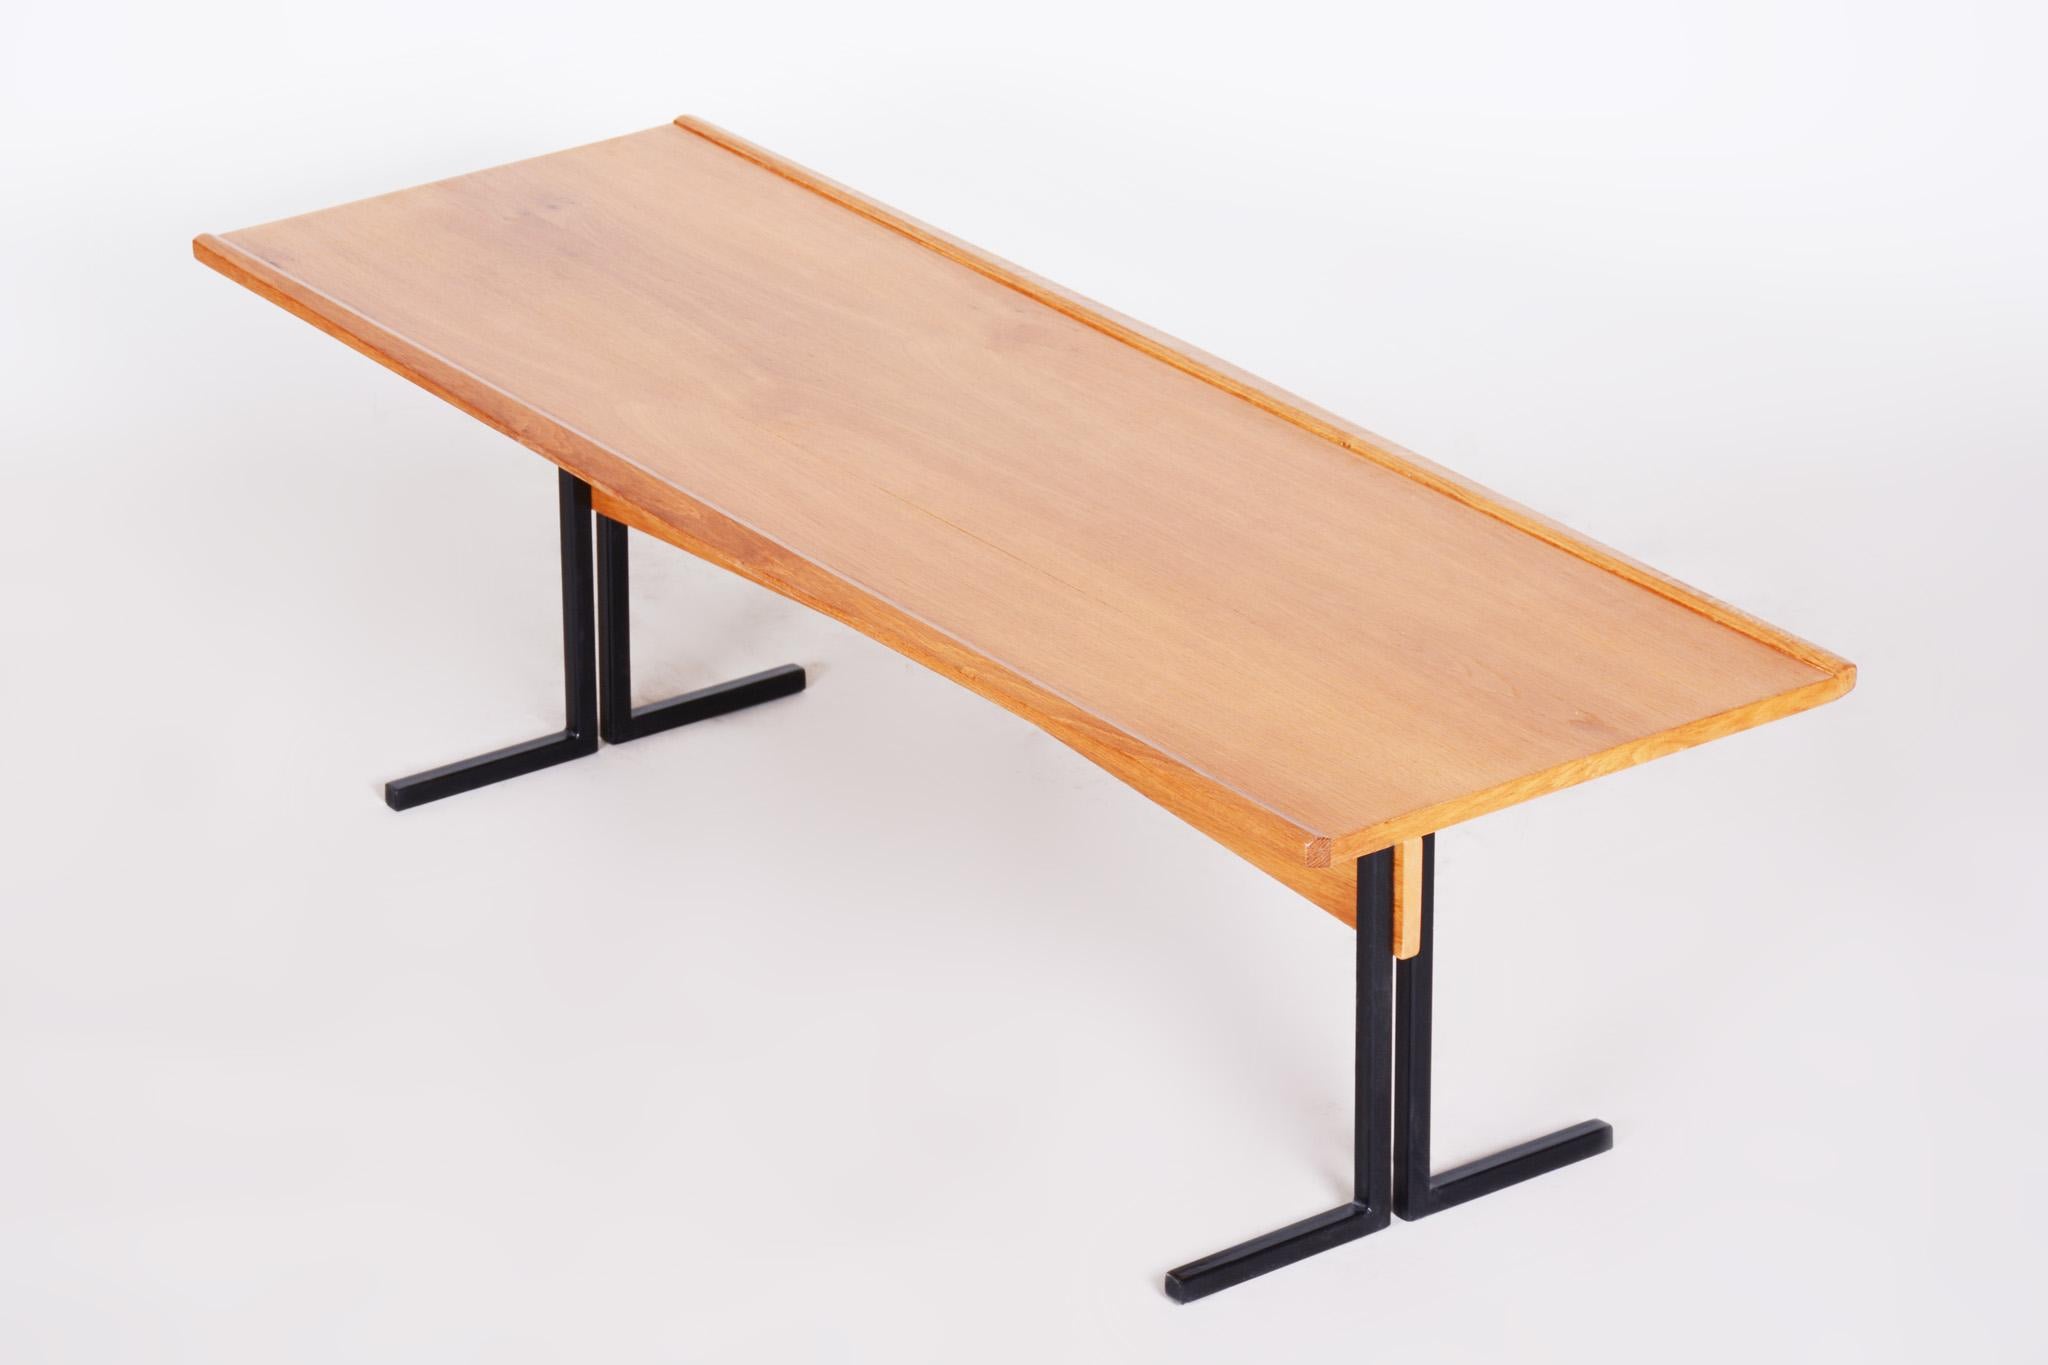 Original Rectangular Ash and Steel Table, Czech Mid-Century Modern, 1960s For Sale 2